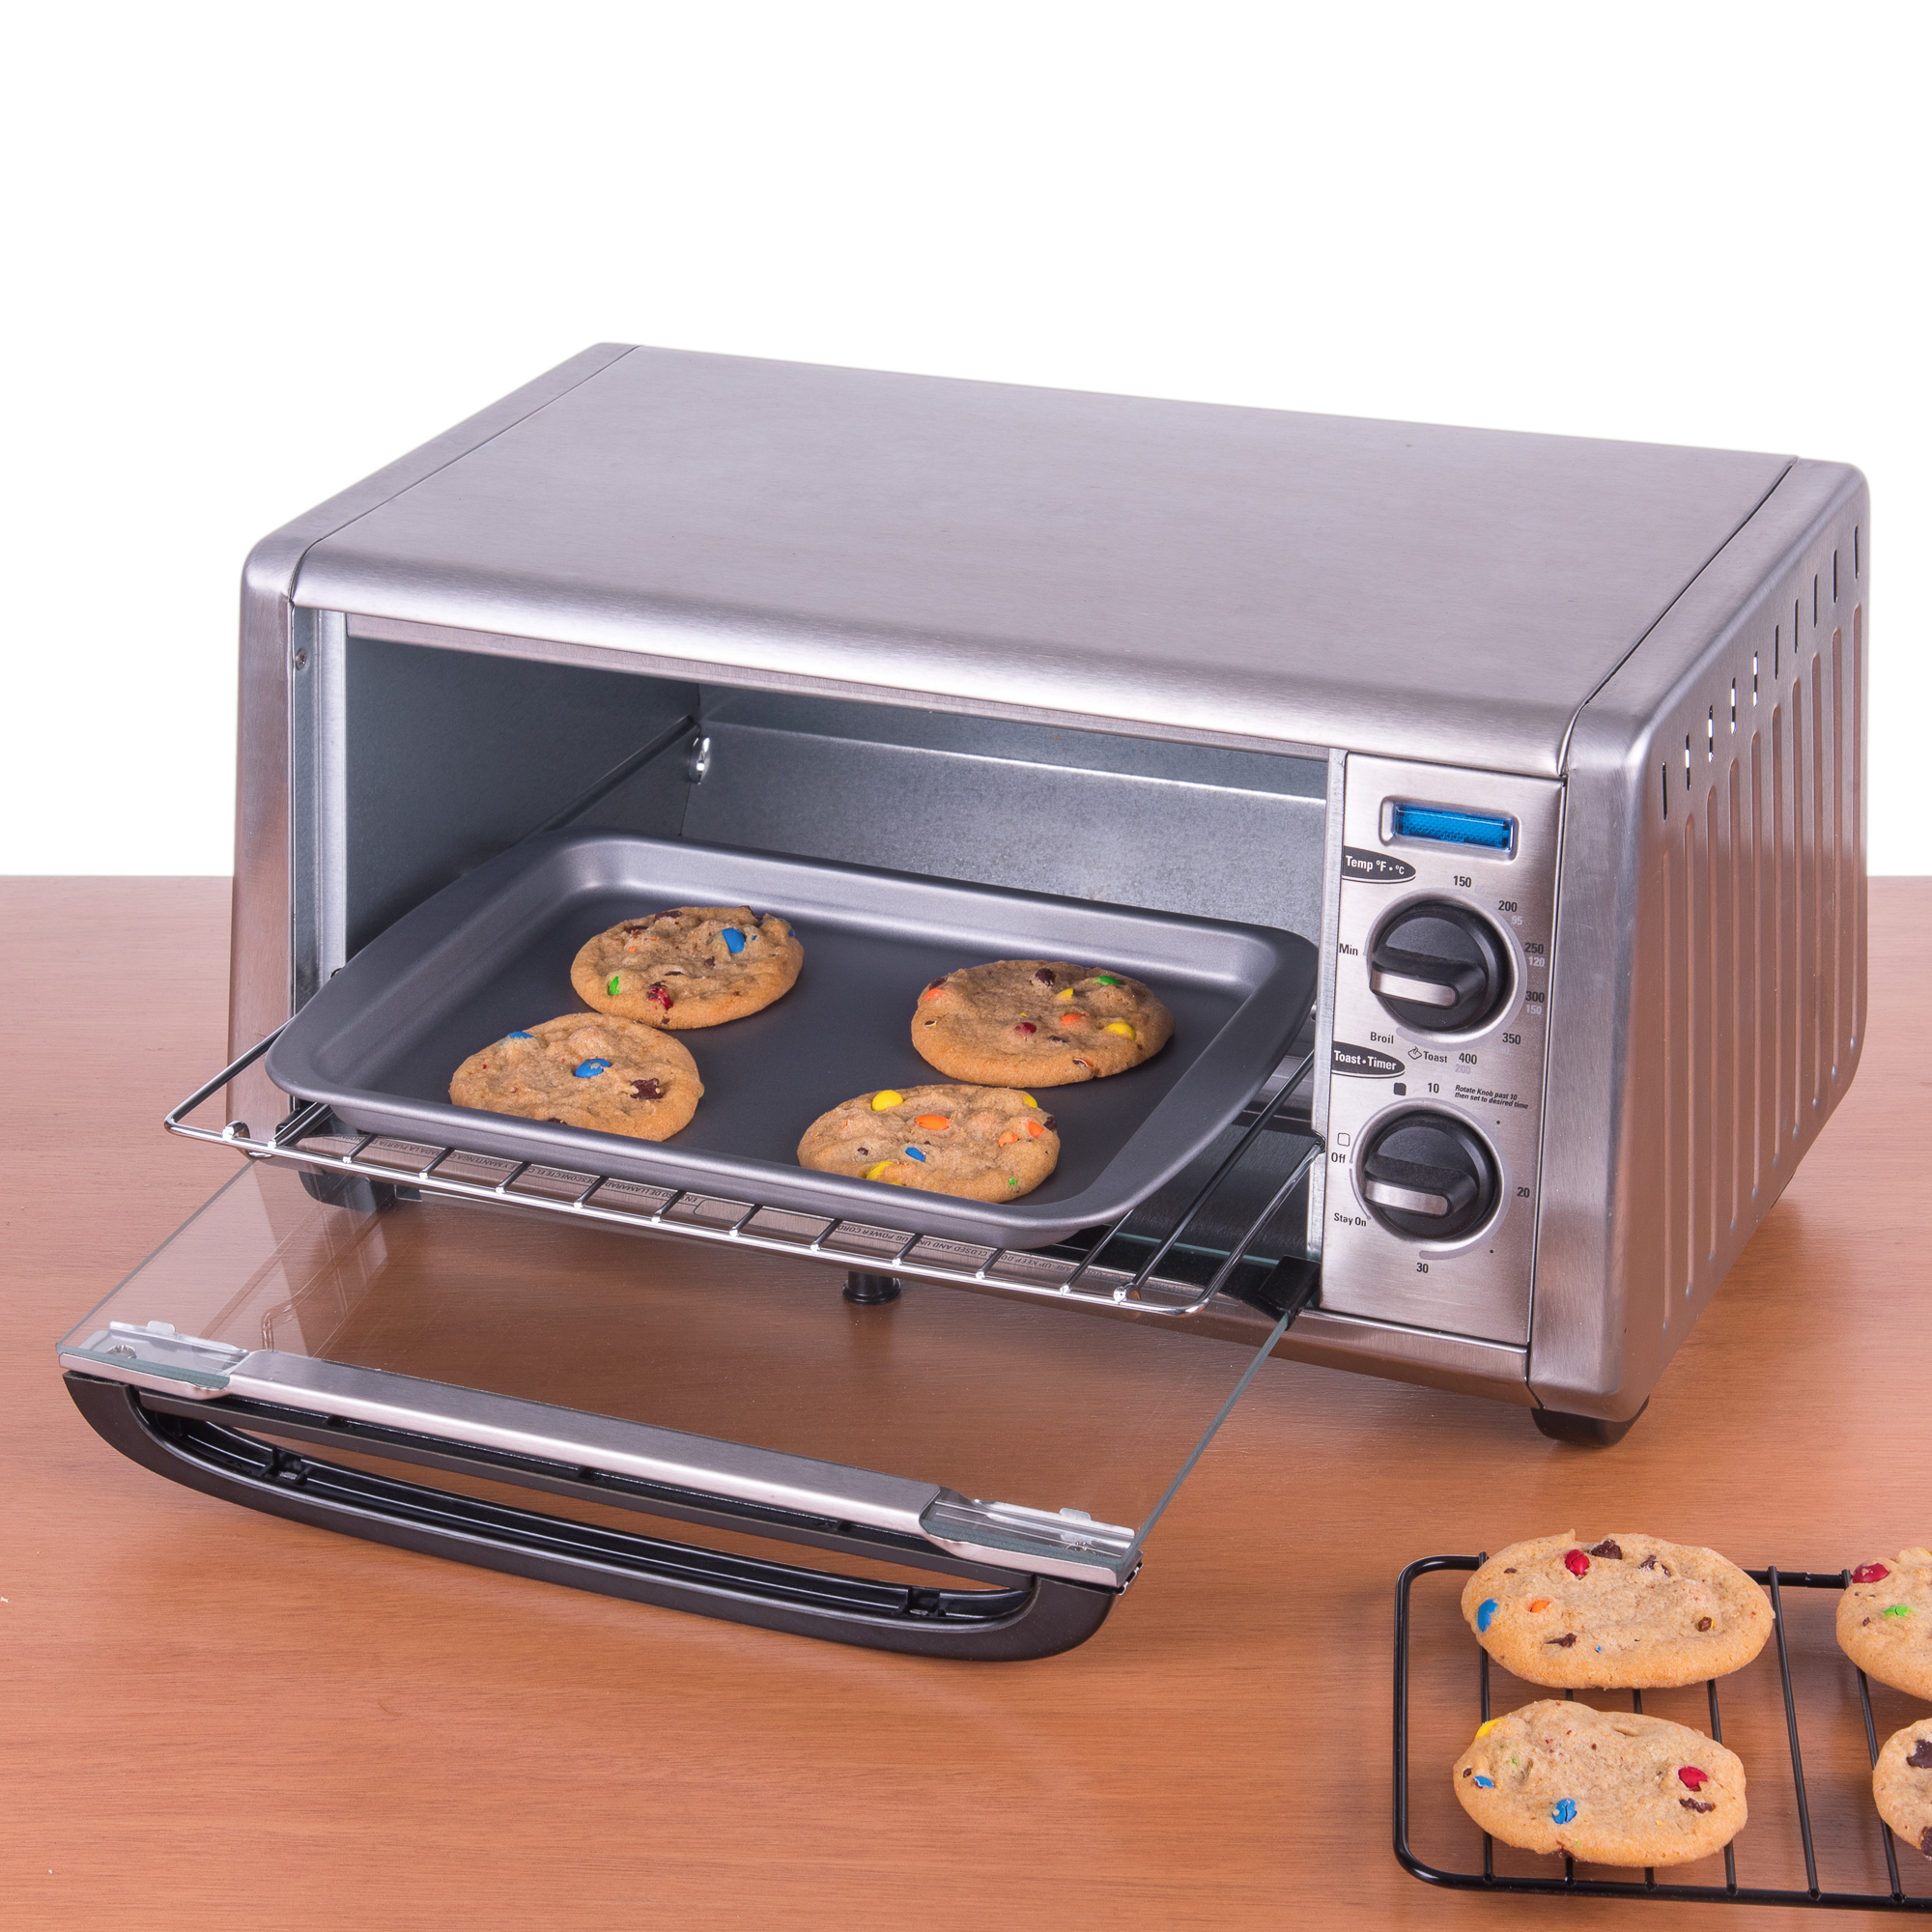 BakerEze 8-Piece Nonstick Bakeware Set, Pizza Cookie & Baking Pans, Gray - image 2 of 5